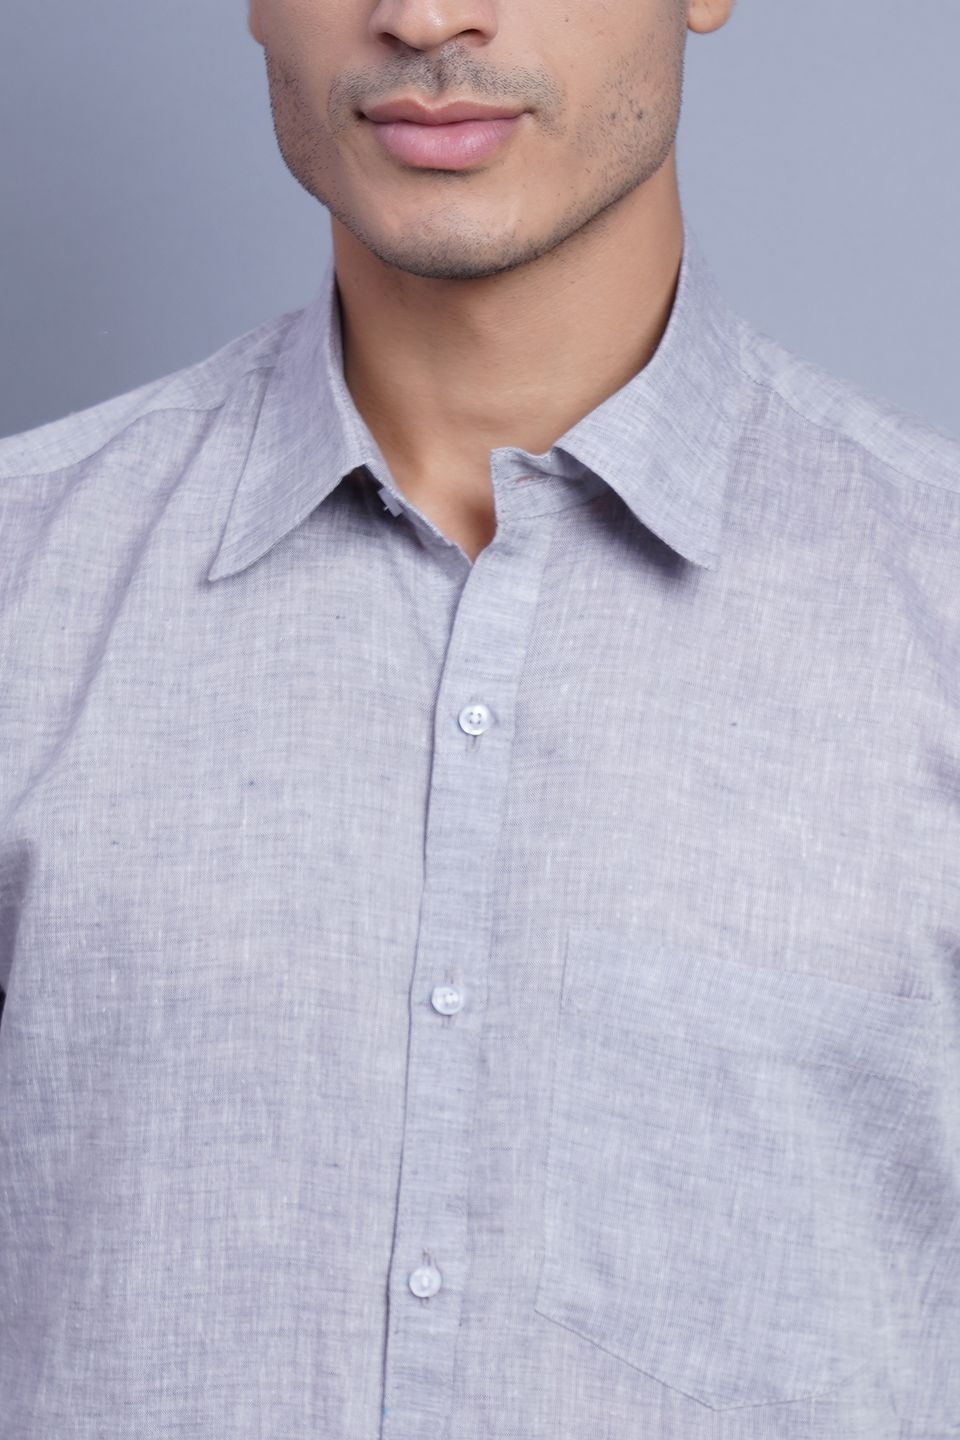 Wintage Men's Linen Casual Shirt: Light Grey